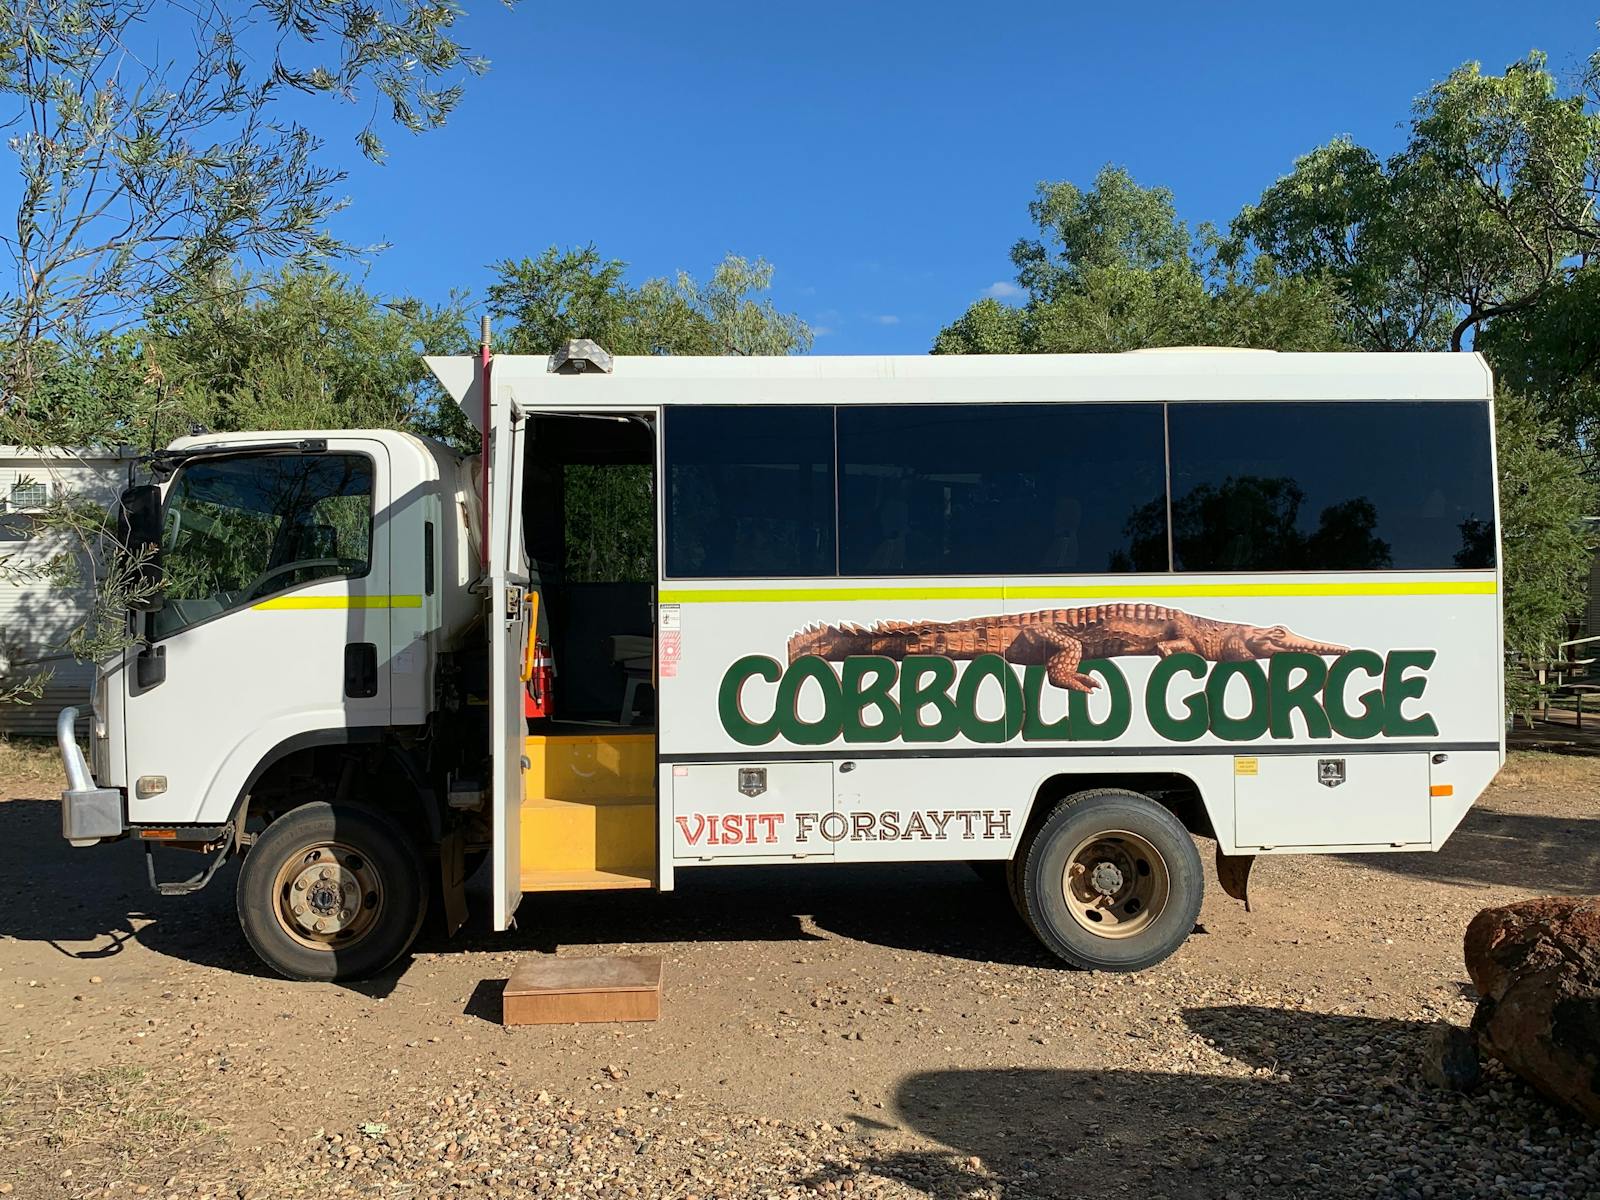 Cobbold Gorge transfer vehicle